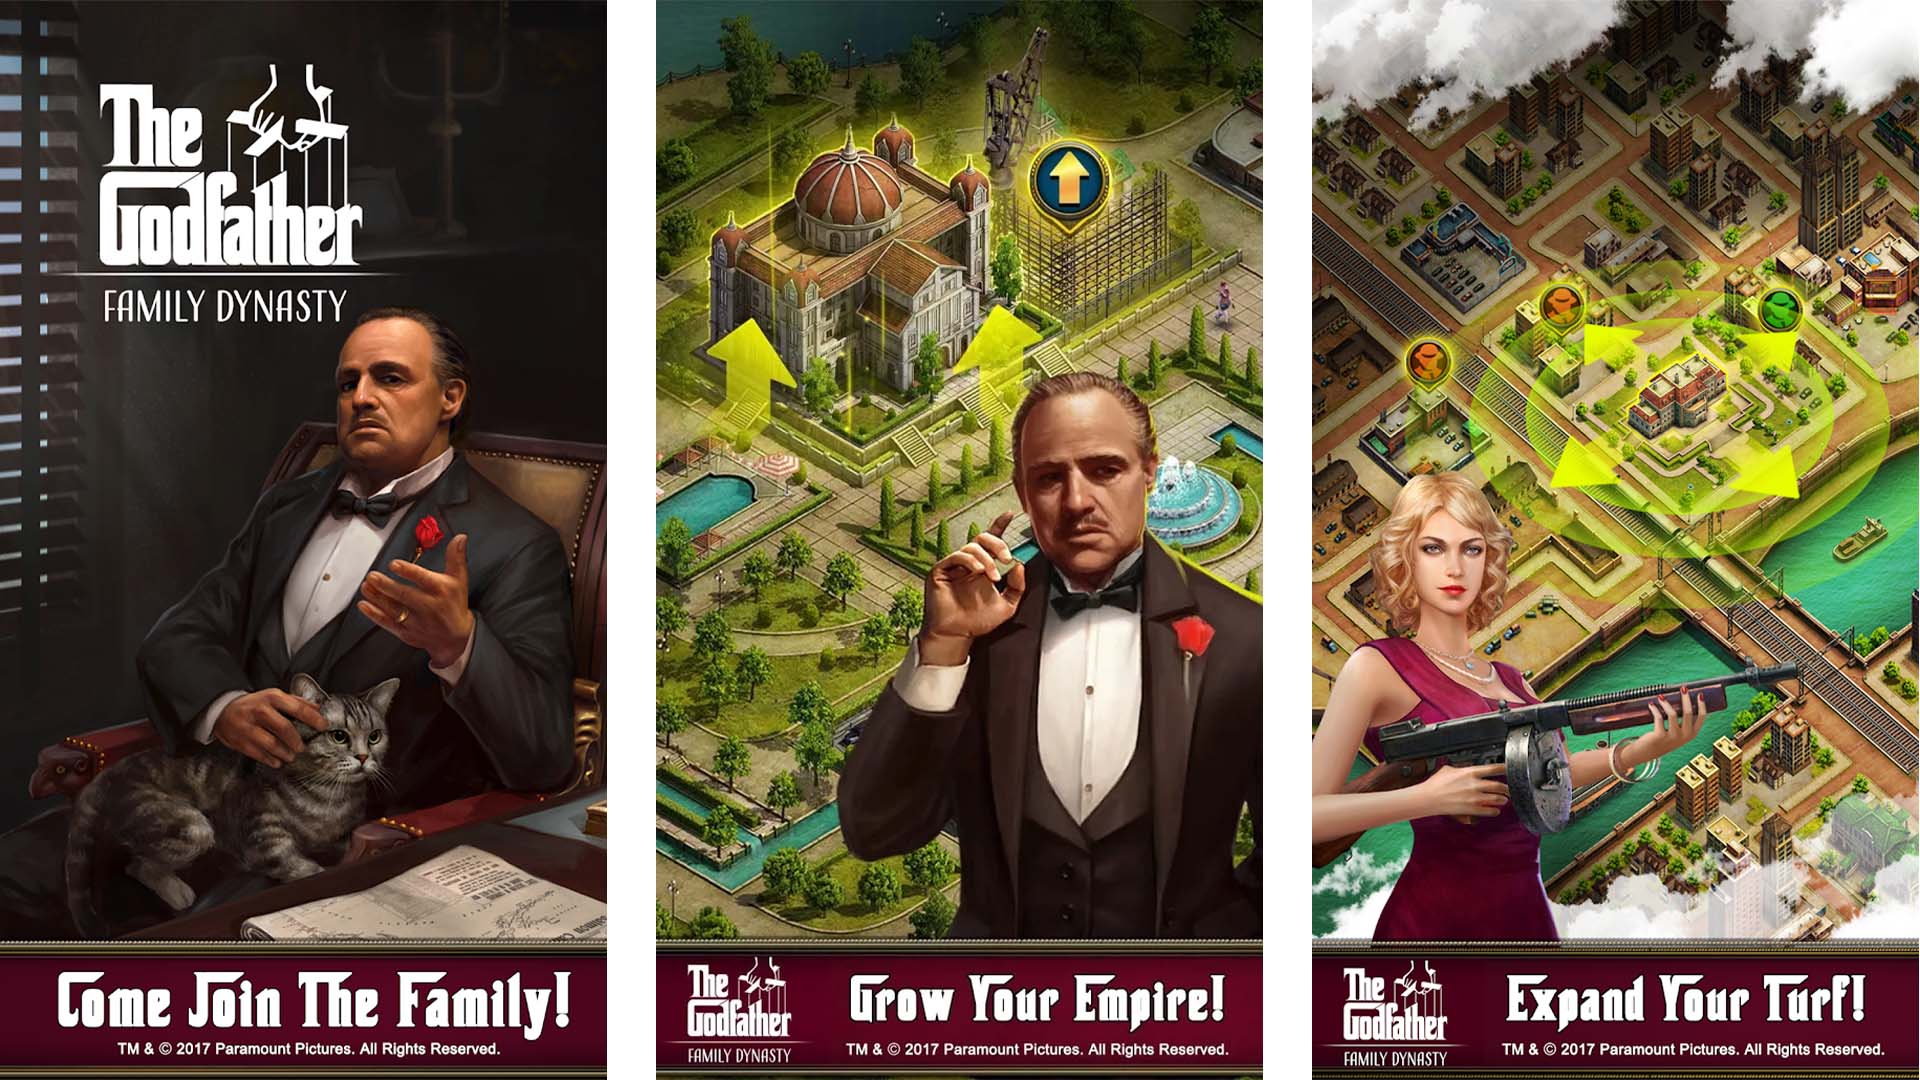 The Godfather Family Dynasty screenshot